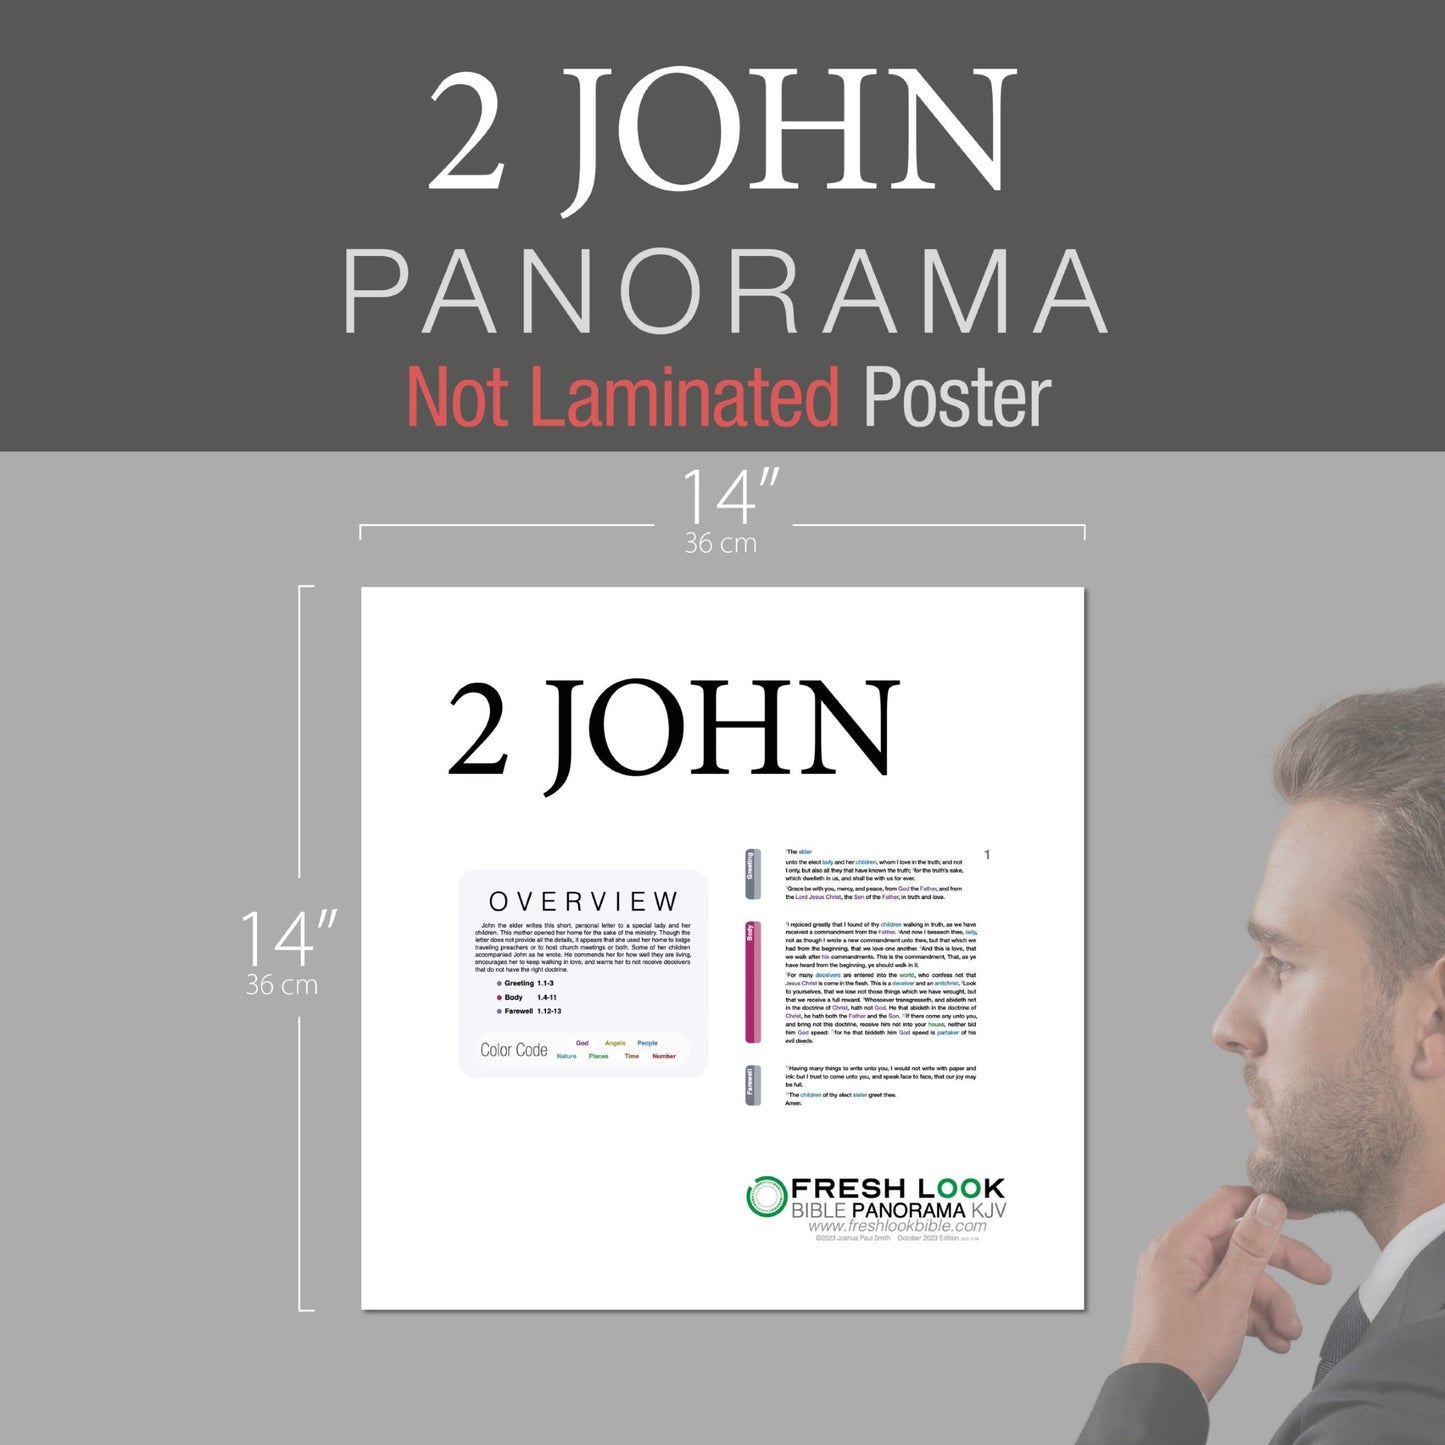 2 John Panorama Not Laminated